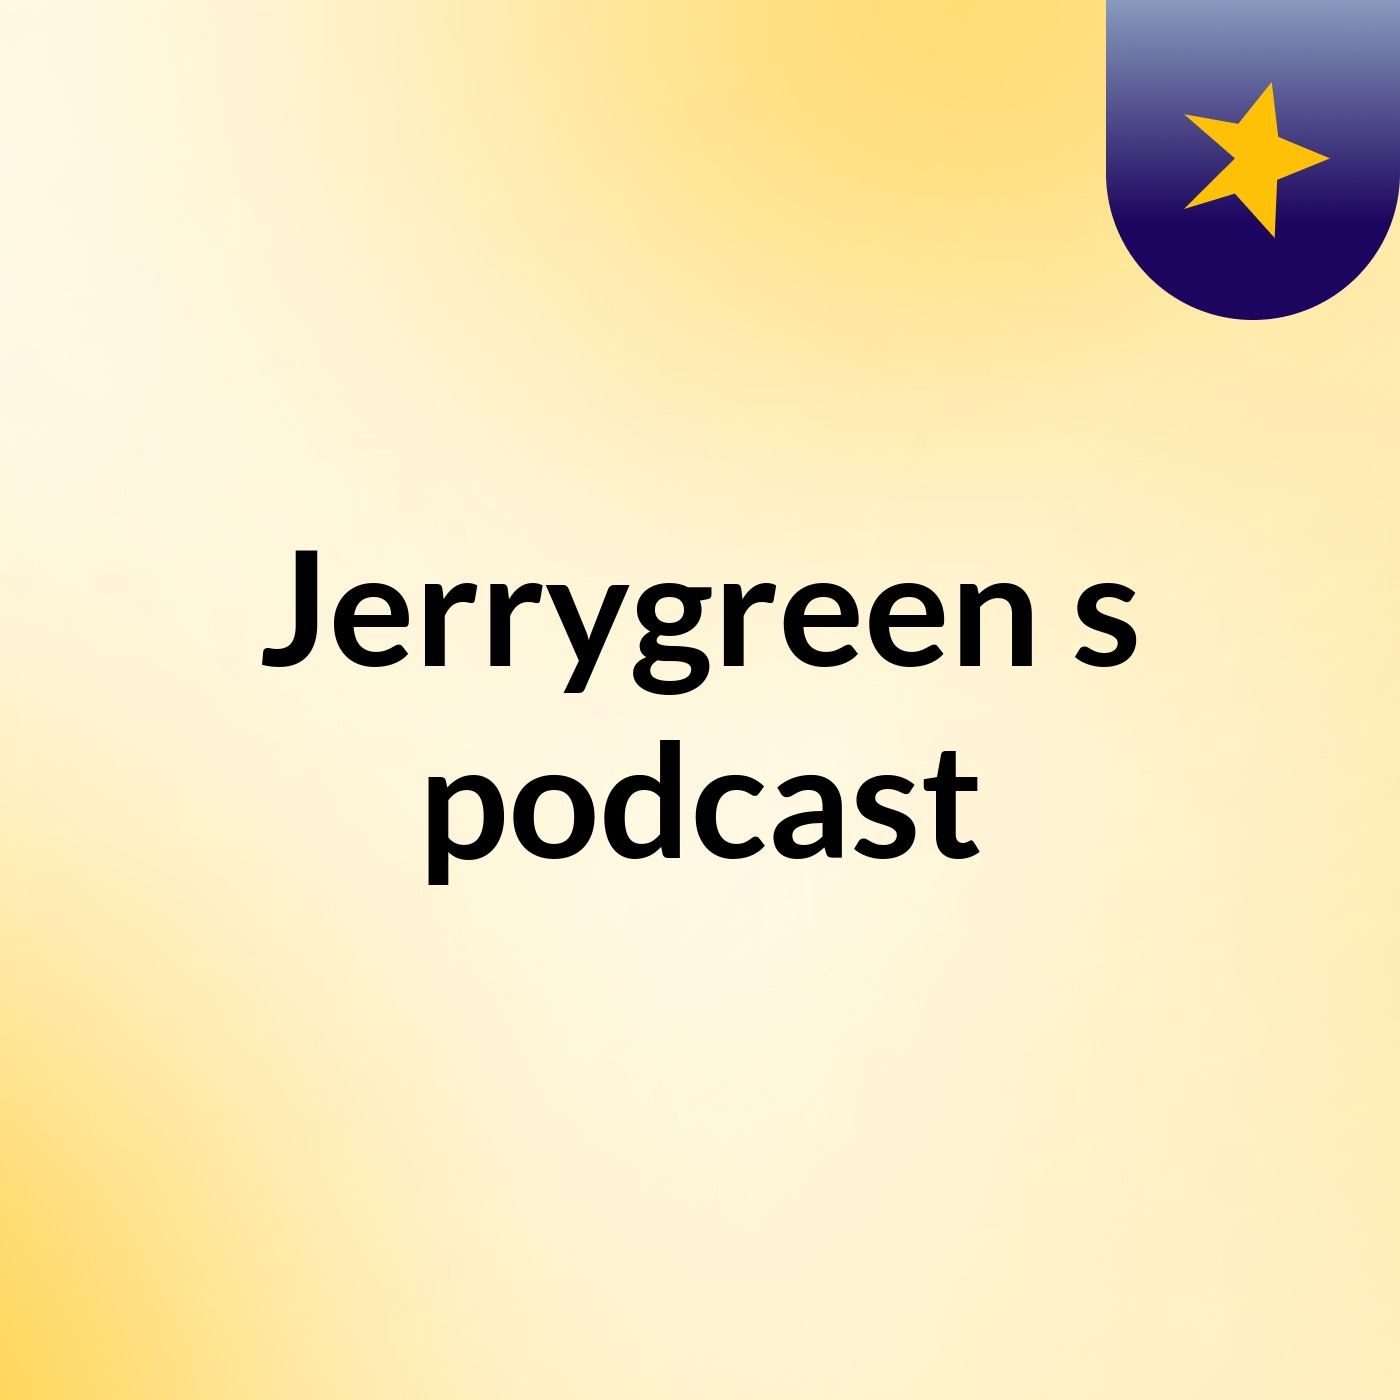 Jerrygreen's podcast